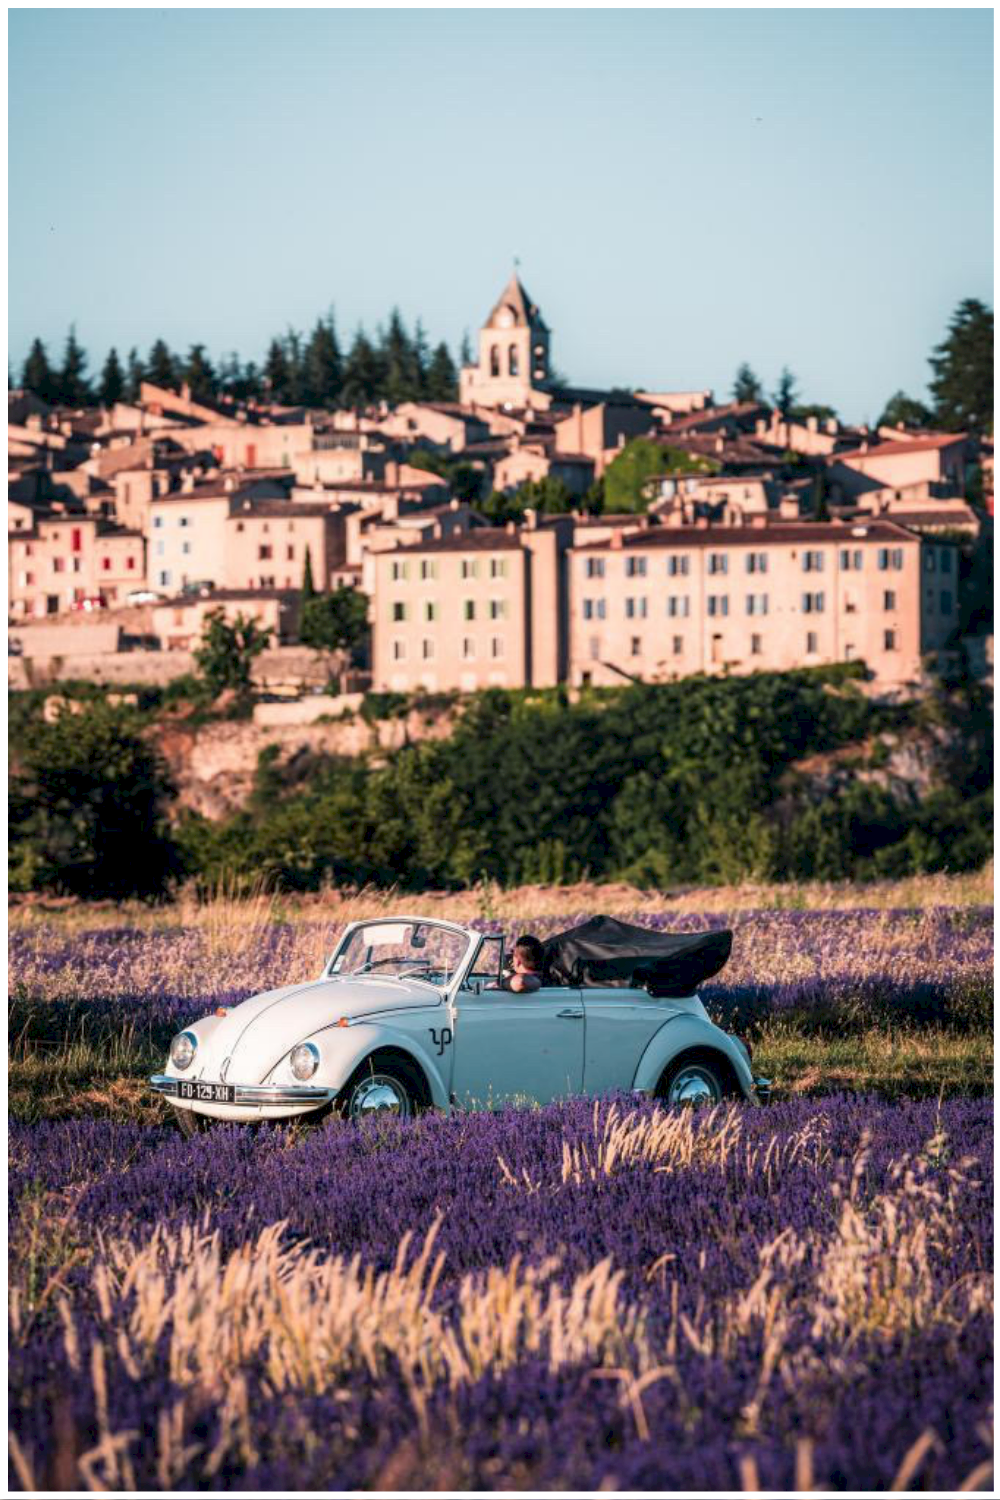 Mariage en Provence en voiture vintage